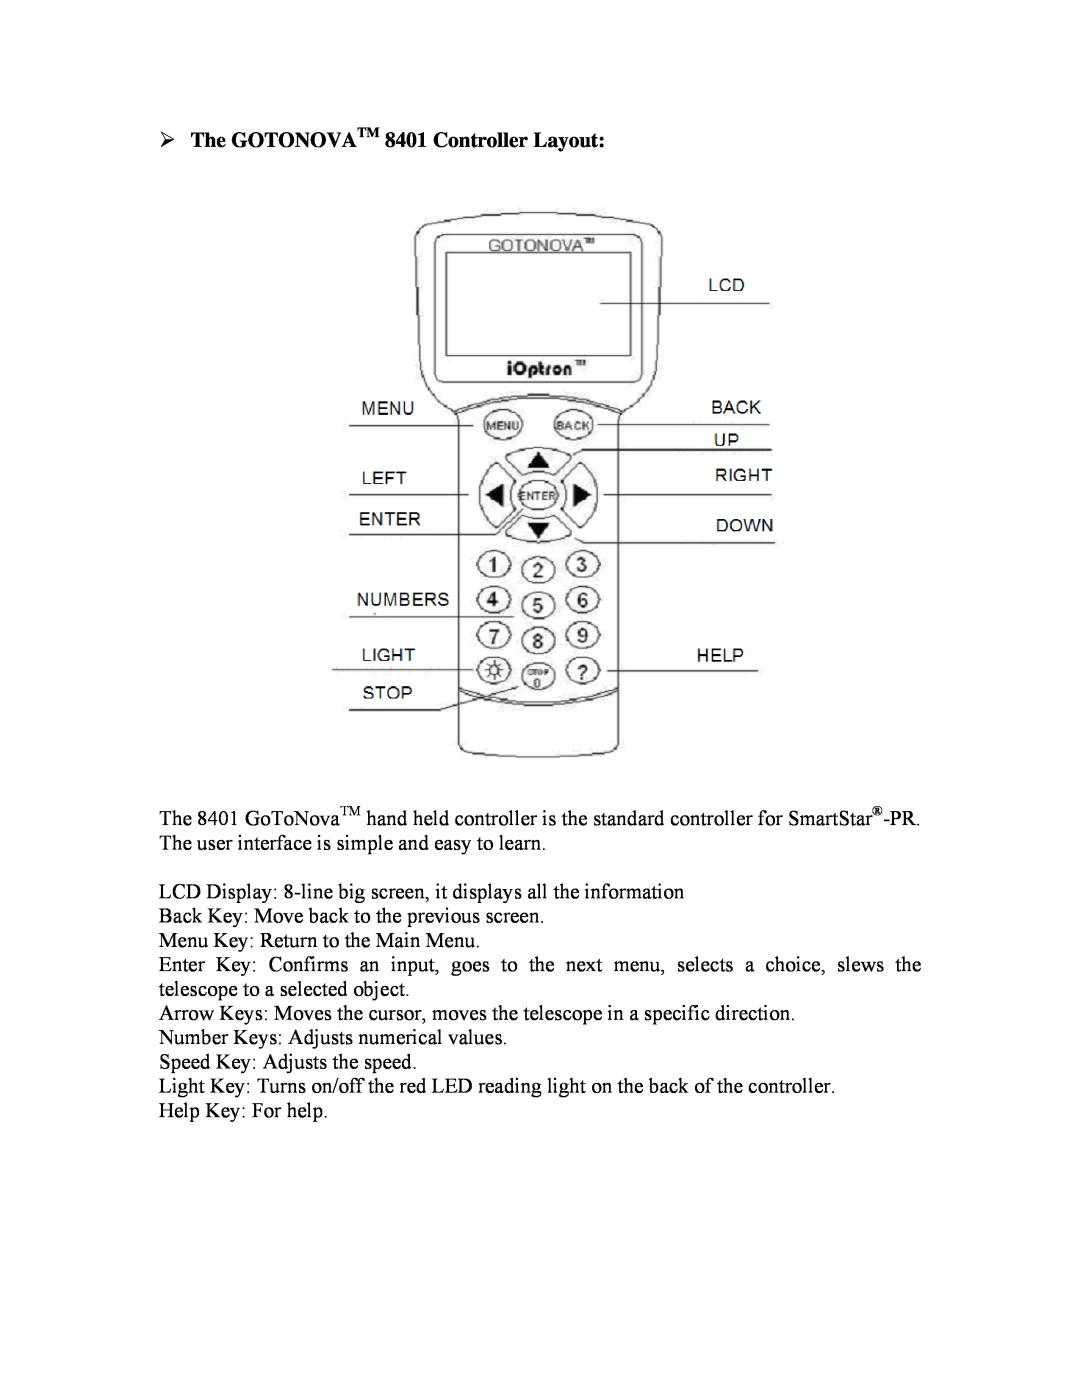 iOptron PR EQ manual The GOTONOVATM 8401 Controller Layout 